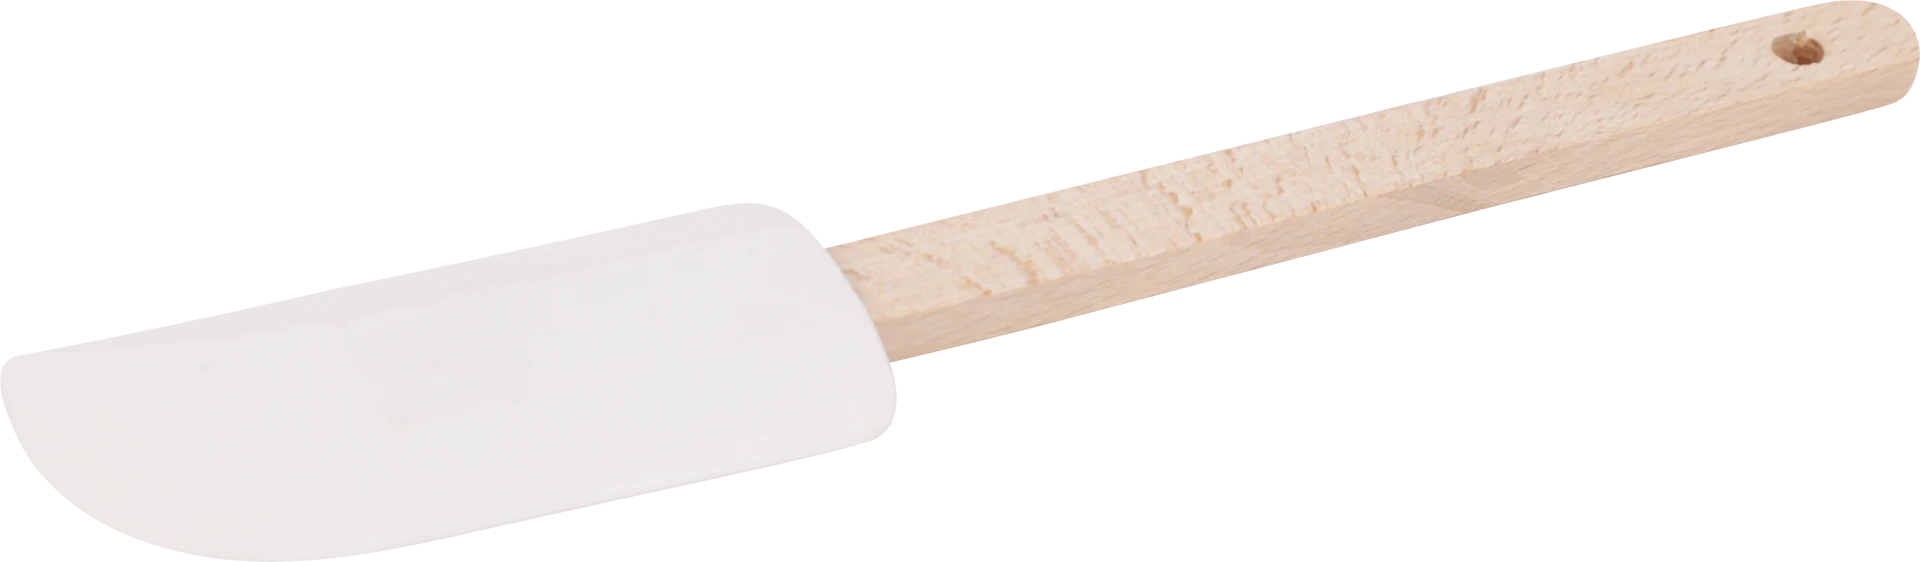 children’s dough spatula